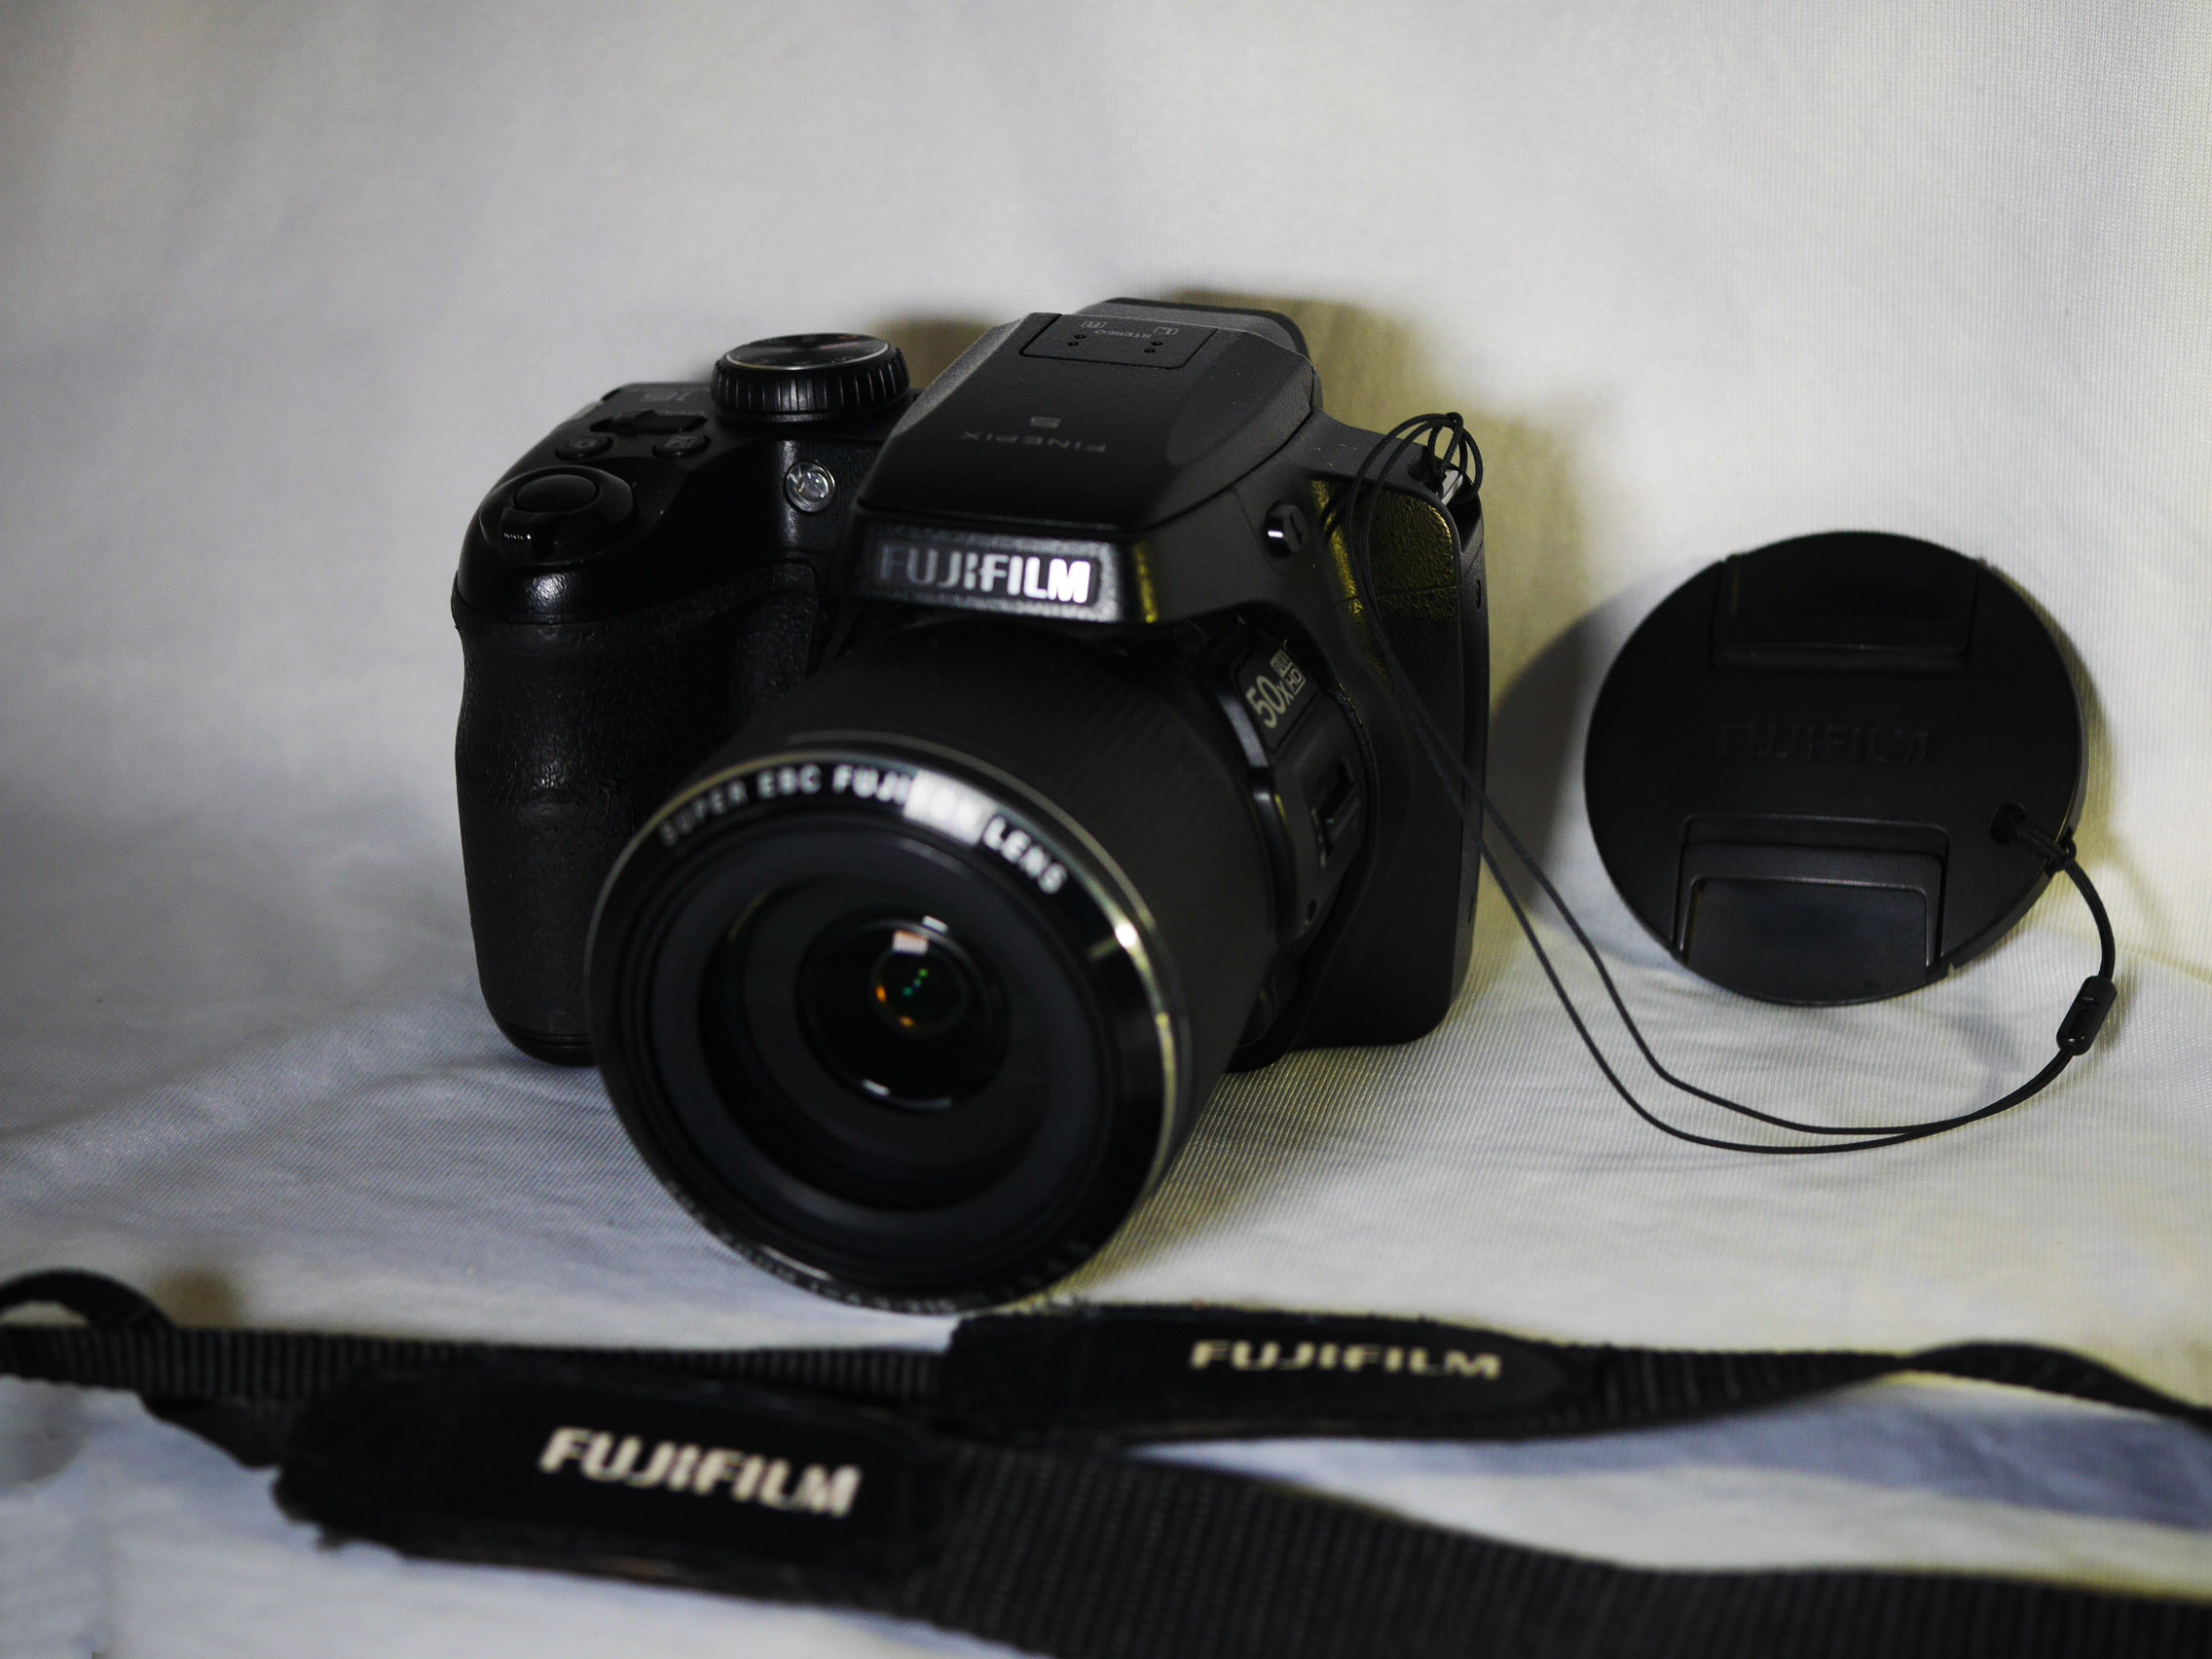 Fuji Fujifilm FinePix S9800 Digital Black Camera, FUJINON 50X Optical Zoom (24 - 1200mm), Super Macro, 5-Axis Image Stabilization, 920K-dot Electronic Viewfinder